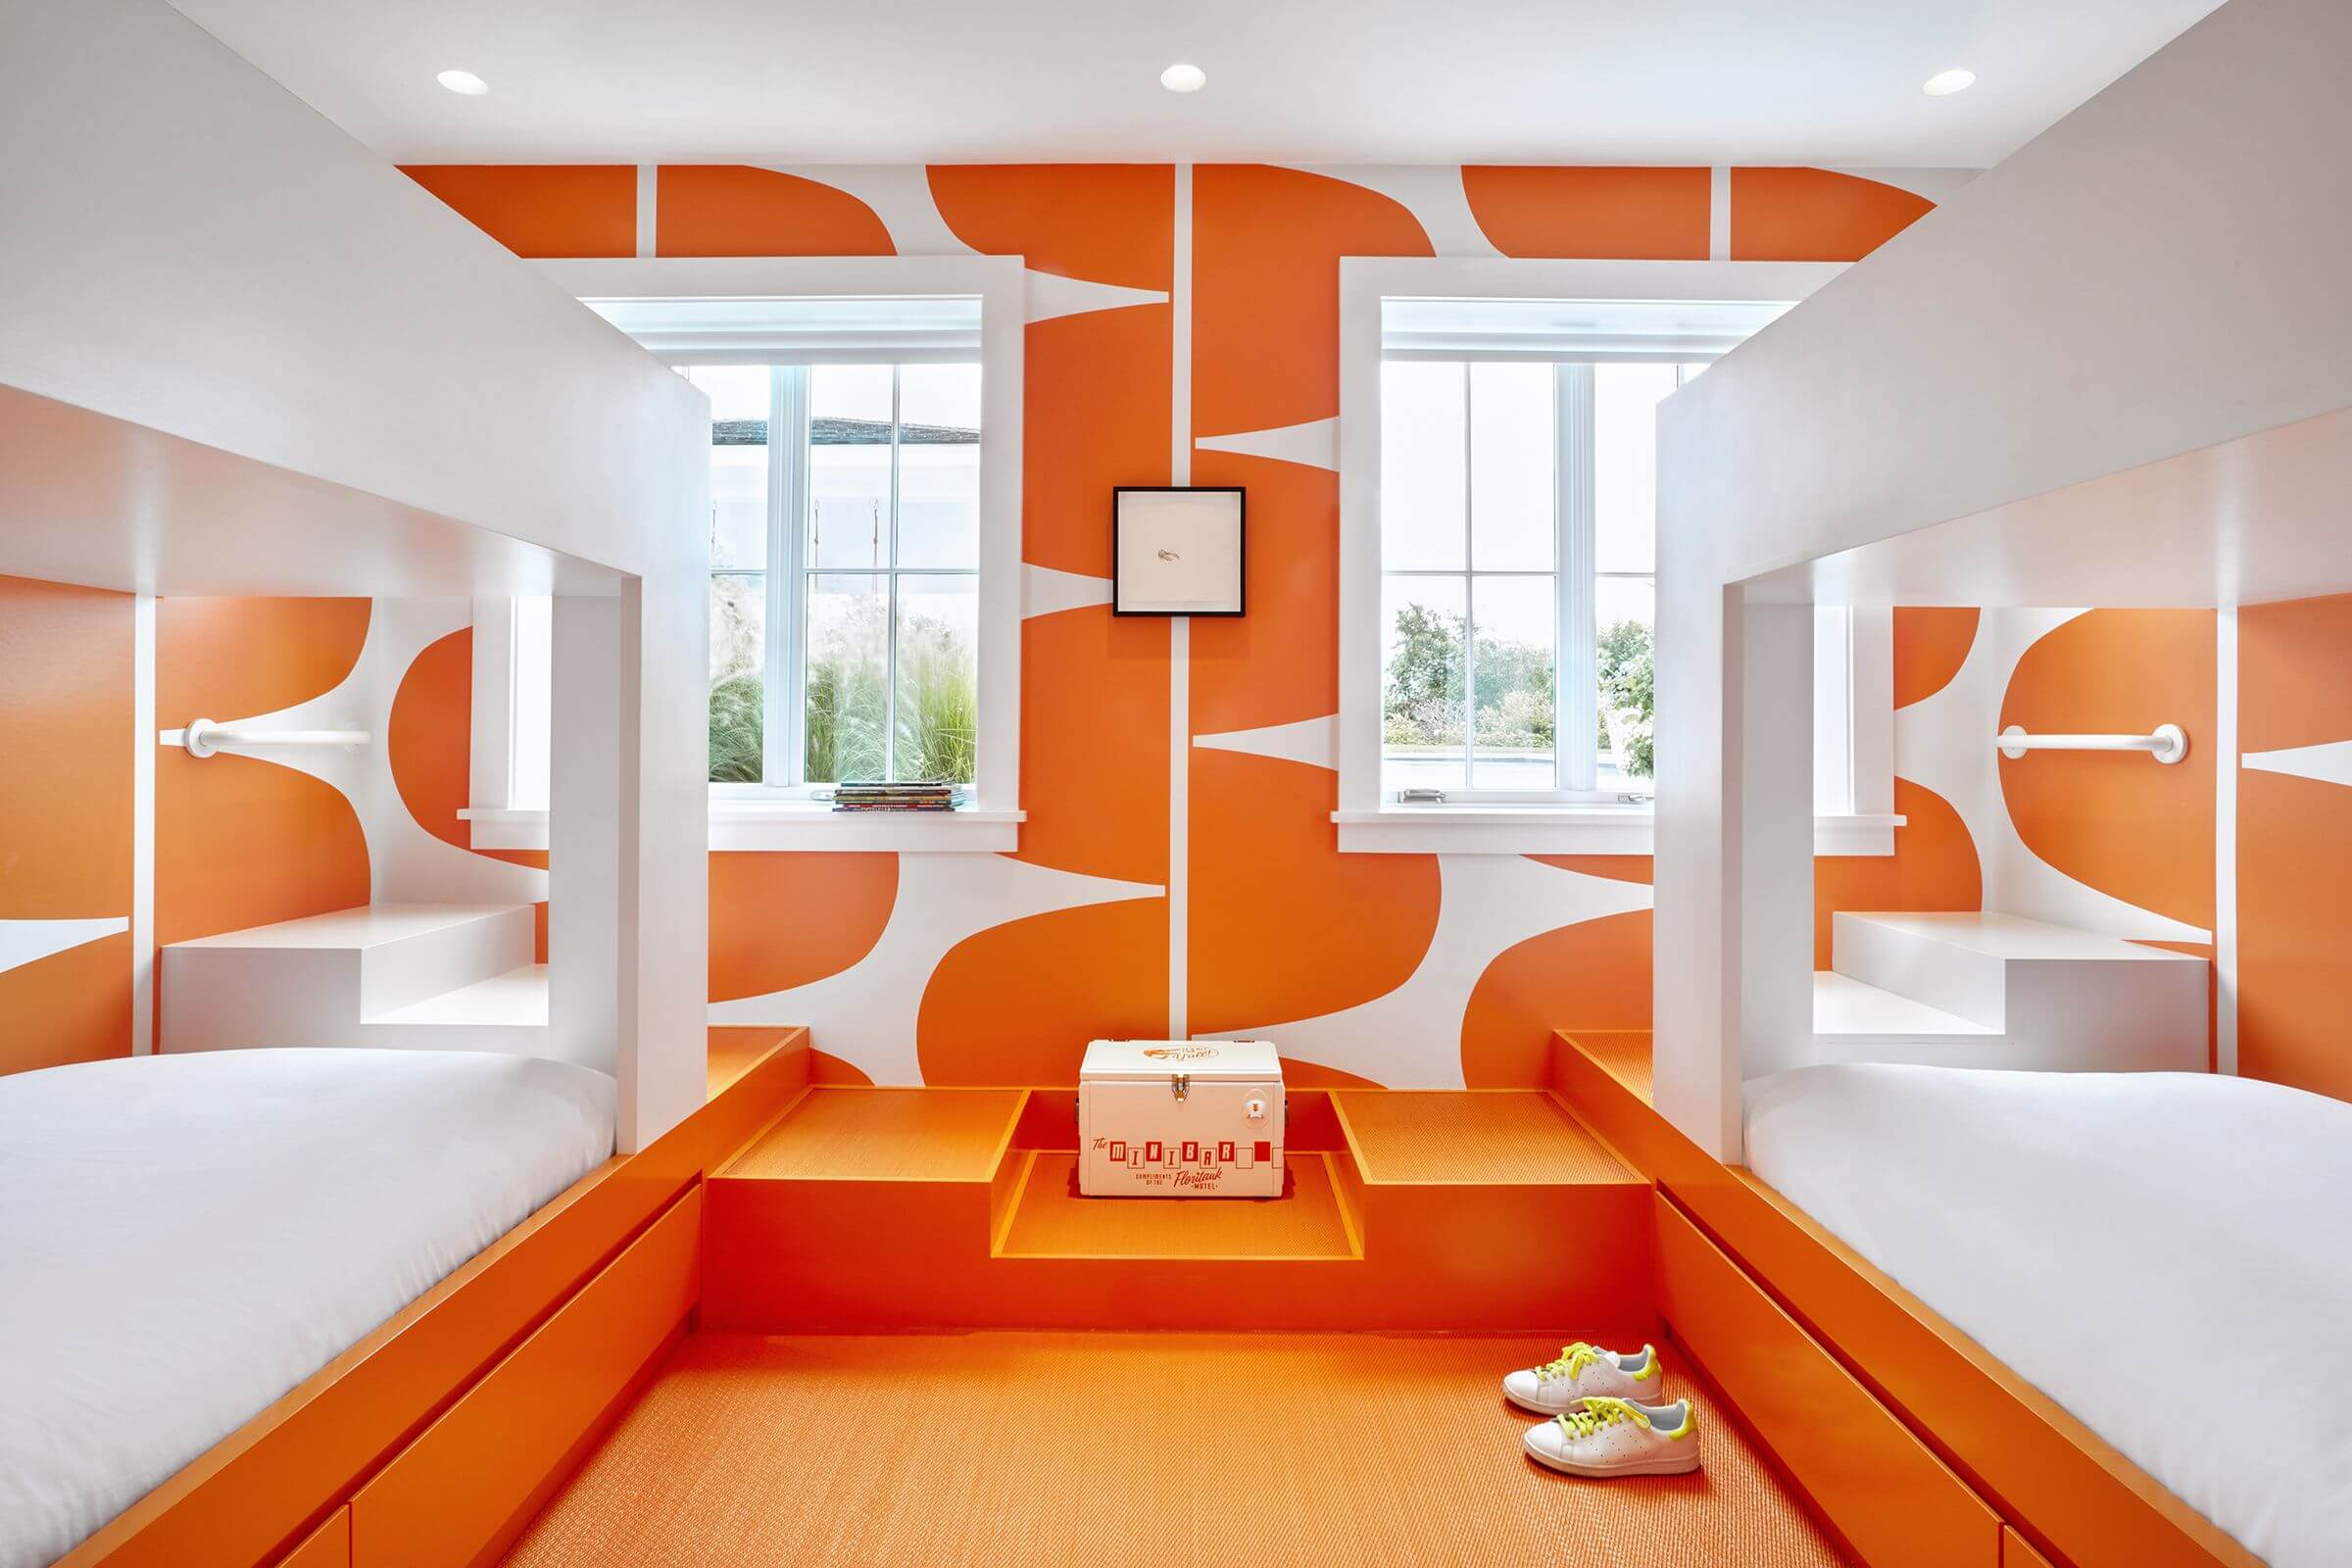 Stunning Wallpaper Ideas for Kids Room